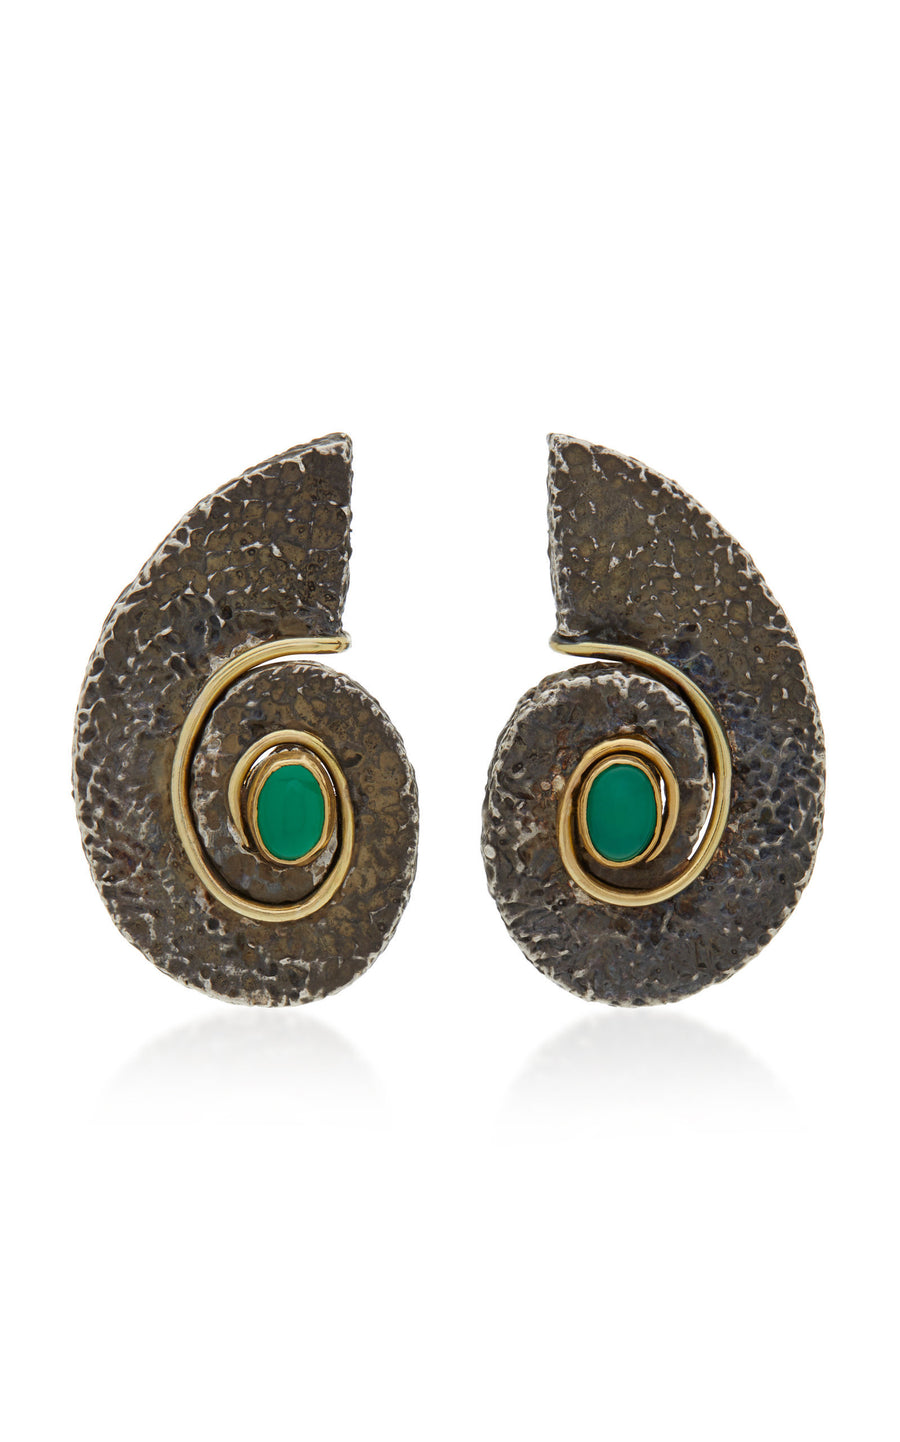 Scroll Earrings with Green Onyx